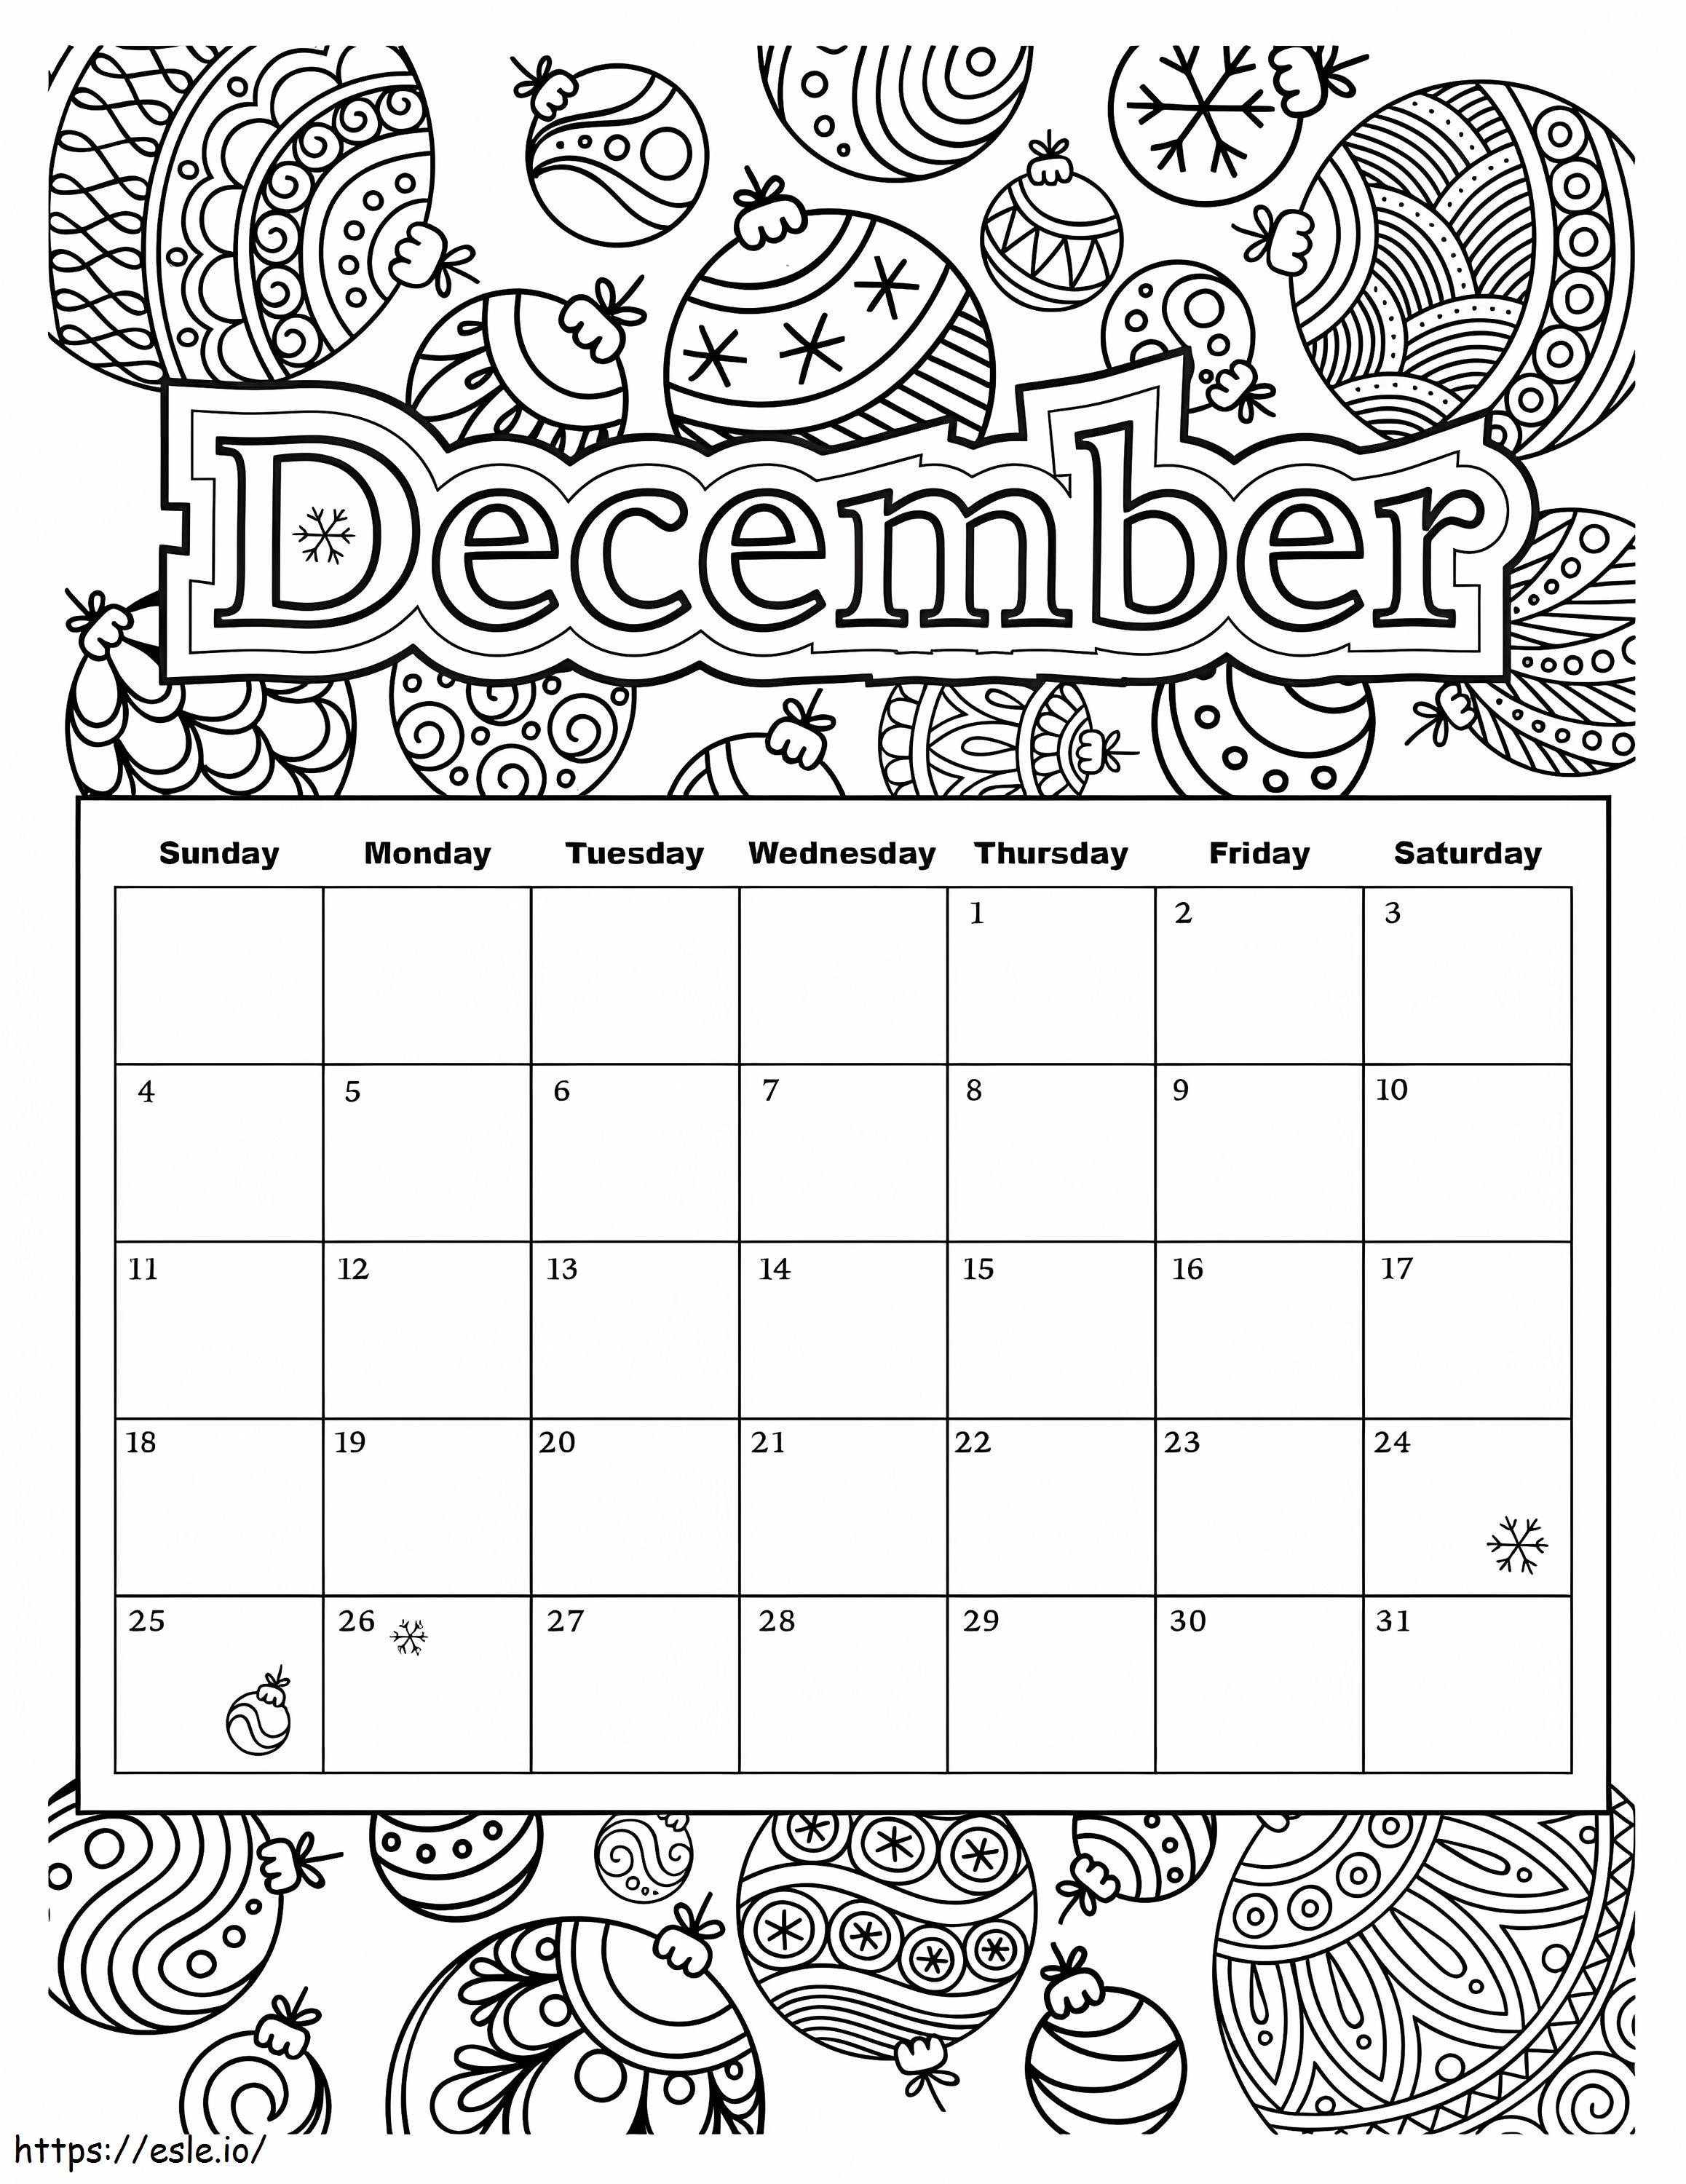 December Calendar coloring page